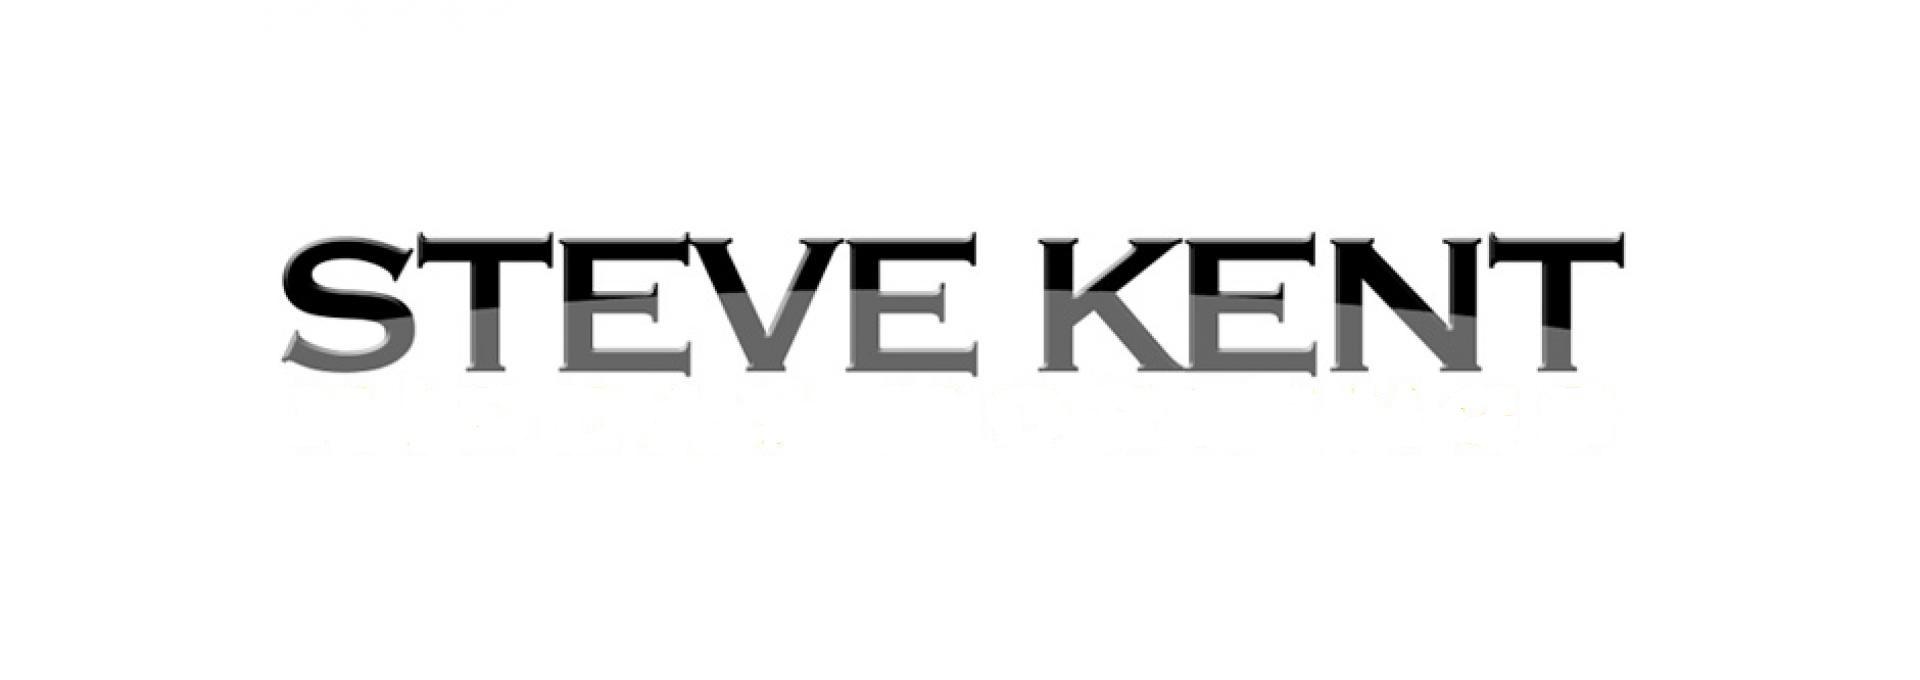 STEVE KENT MIDDAYS hero